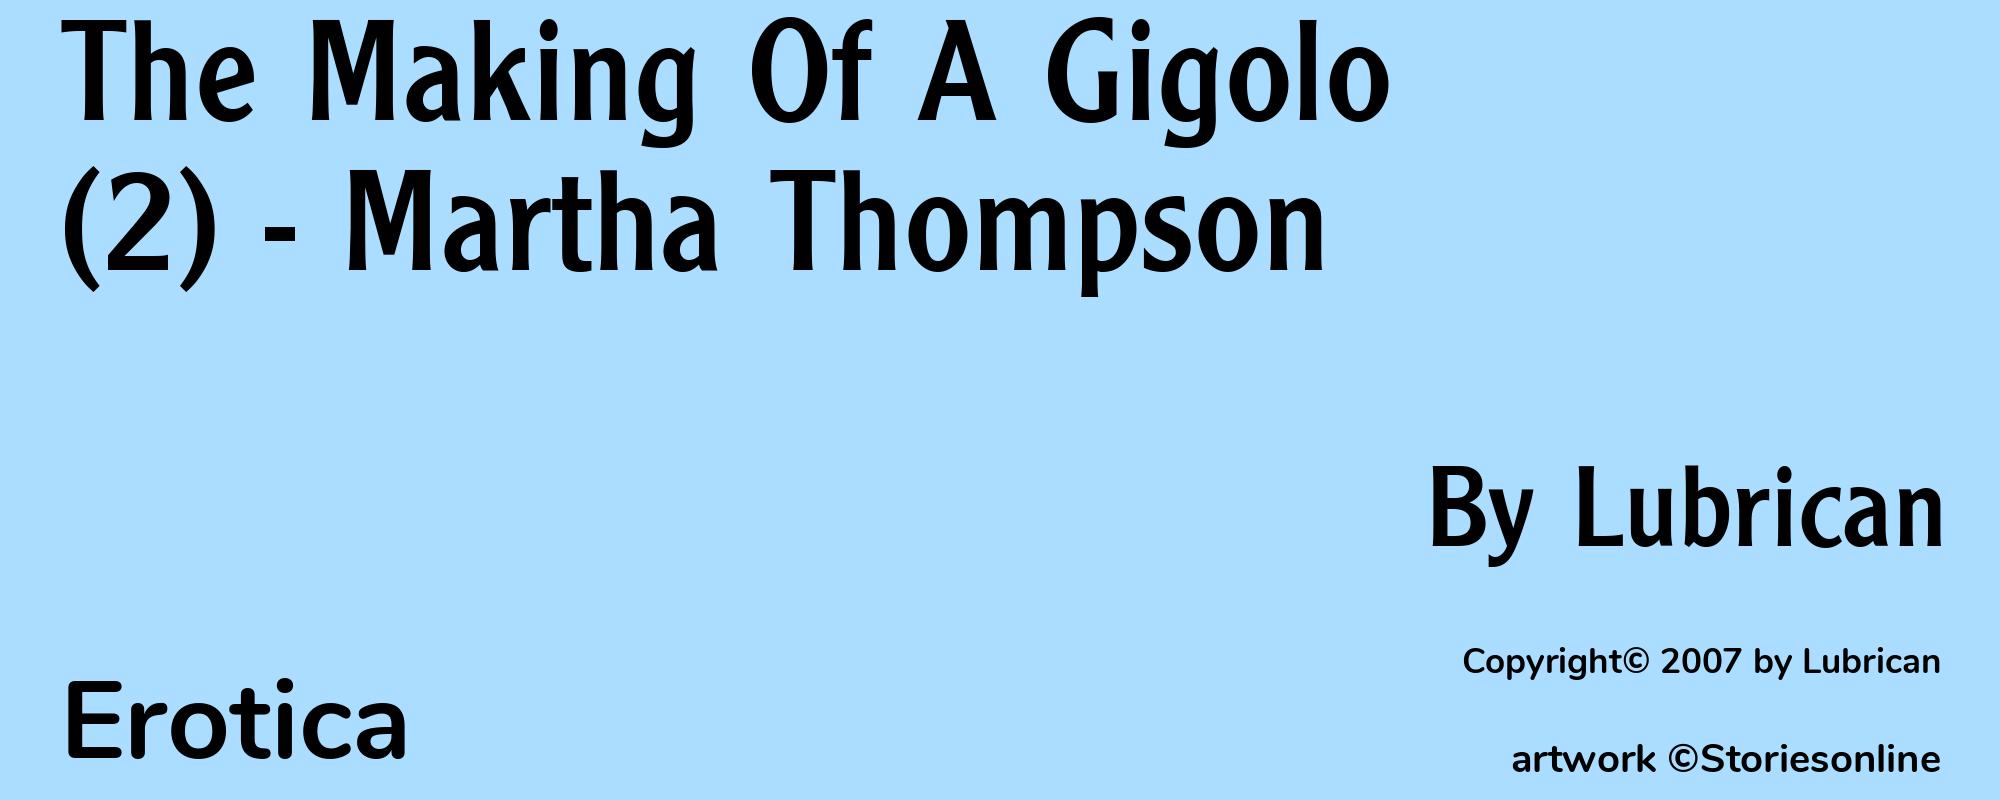 The Making Of A Gigolo (2) - Martha Thompson - Cover